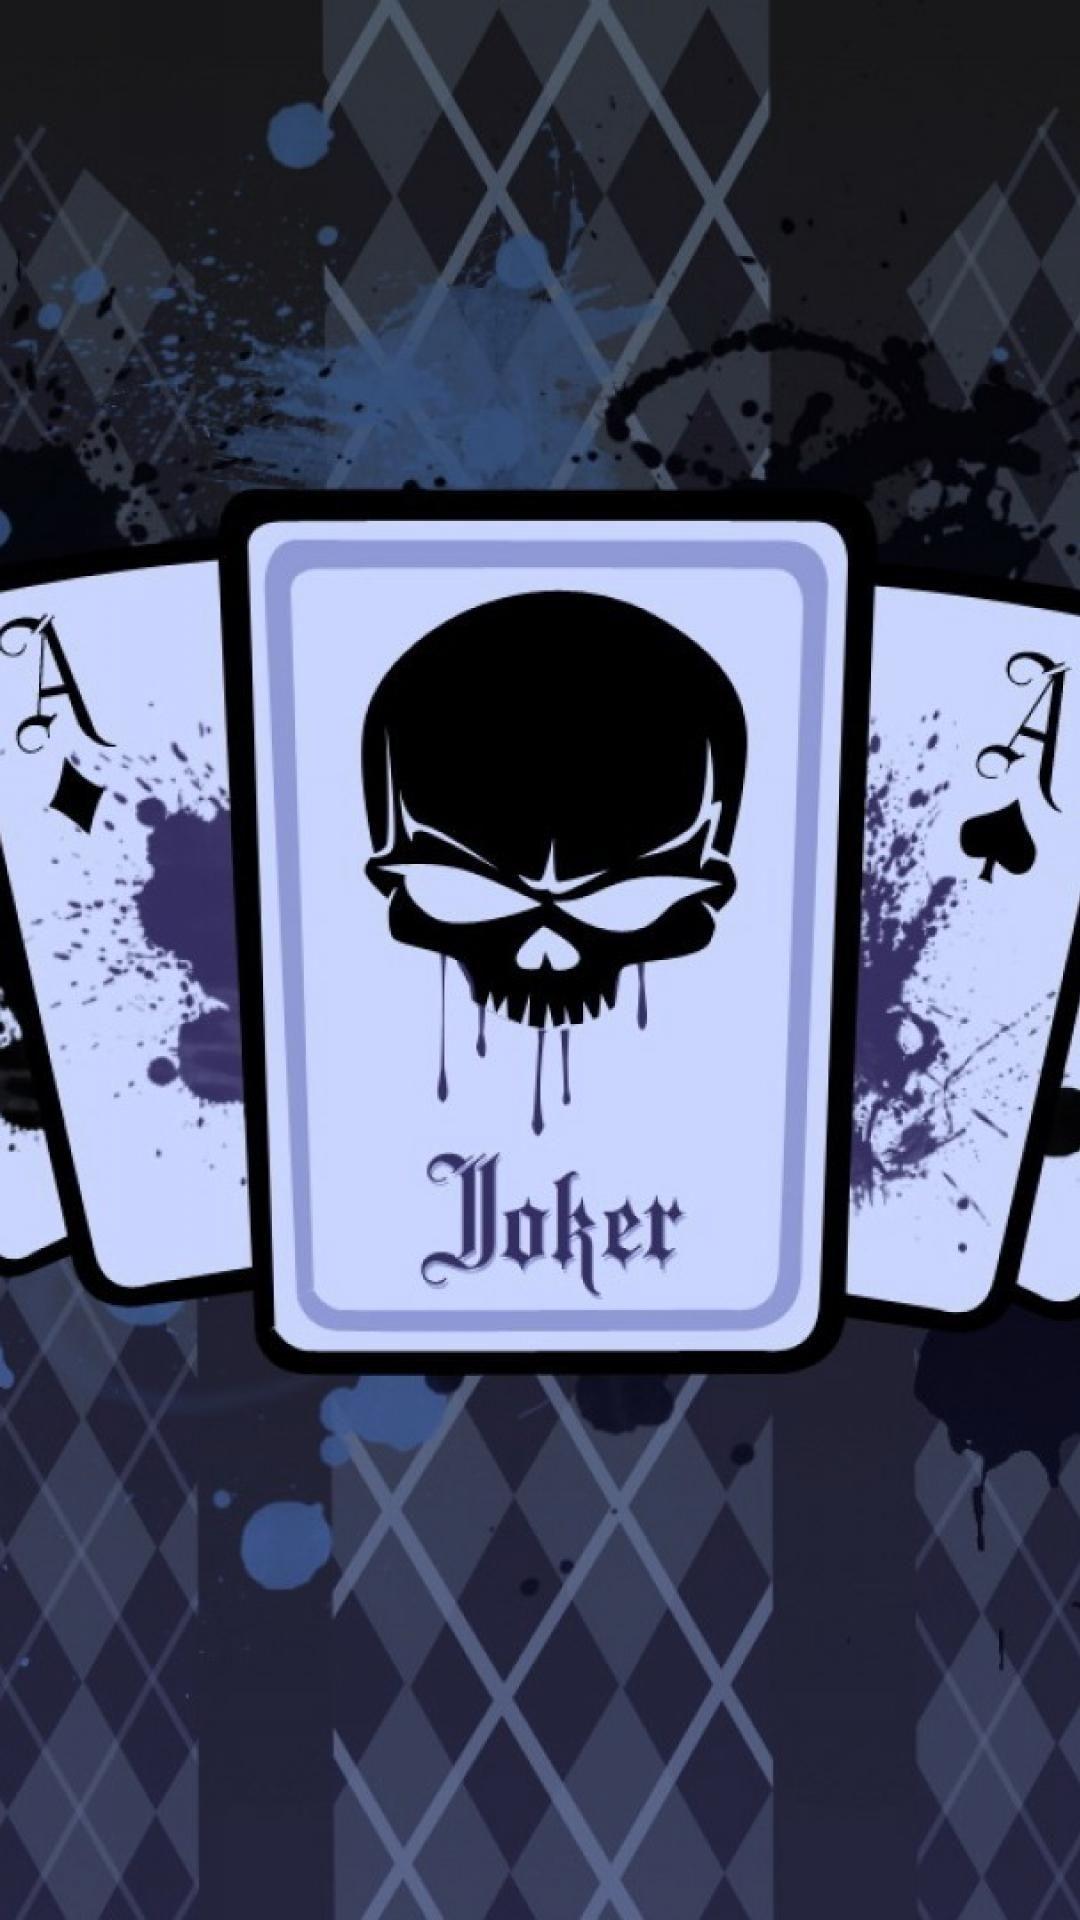 Joker playing card artwork cards wallpaper